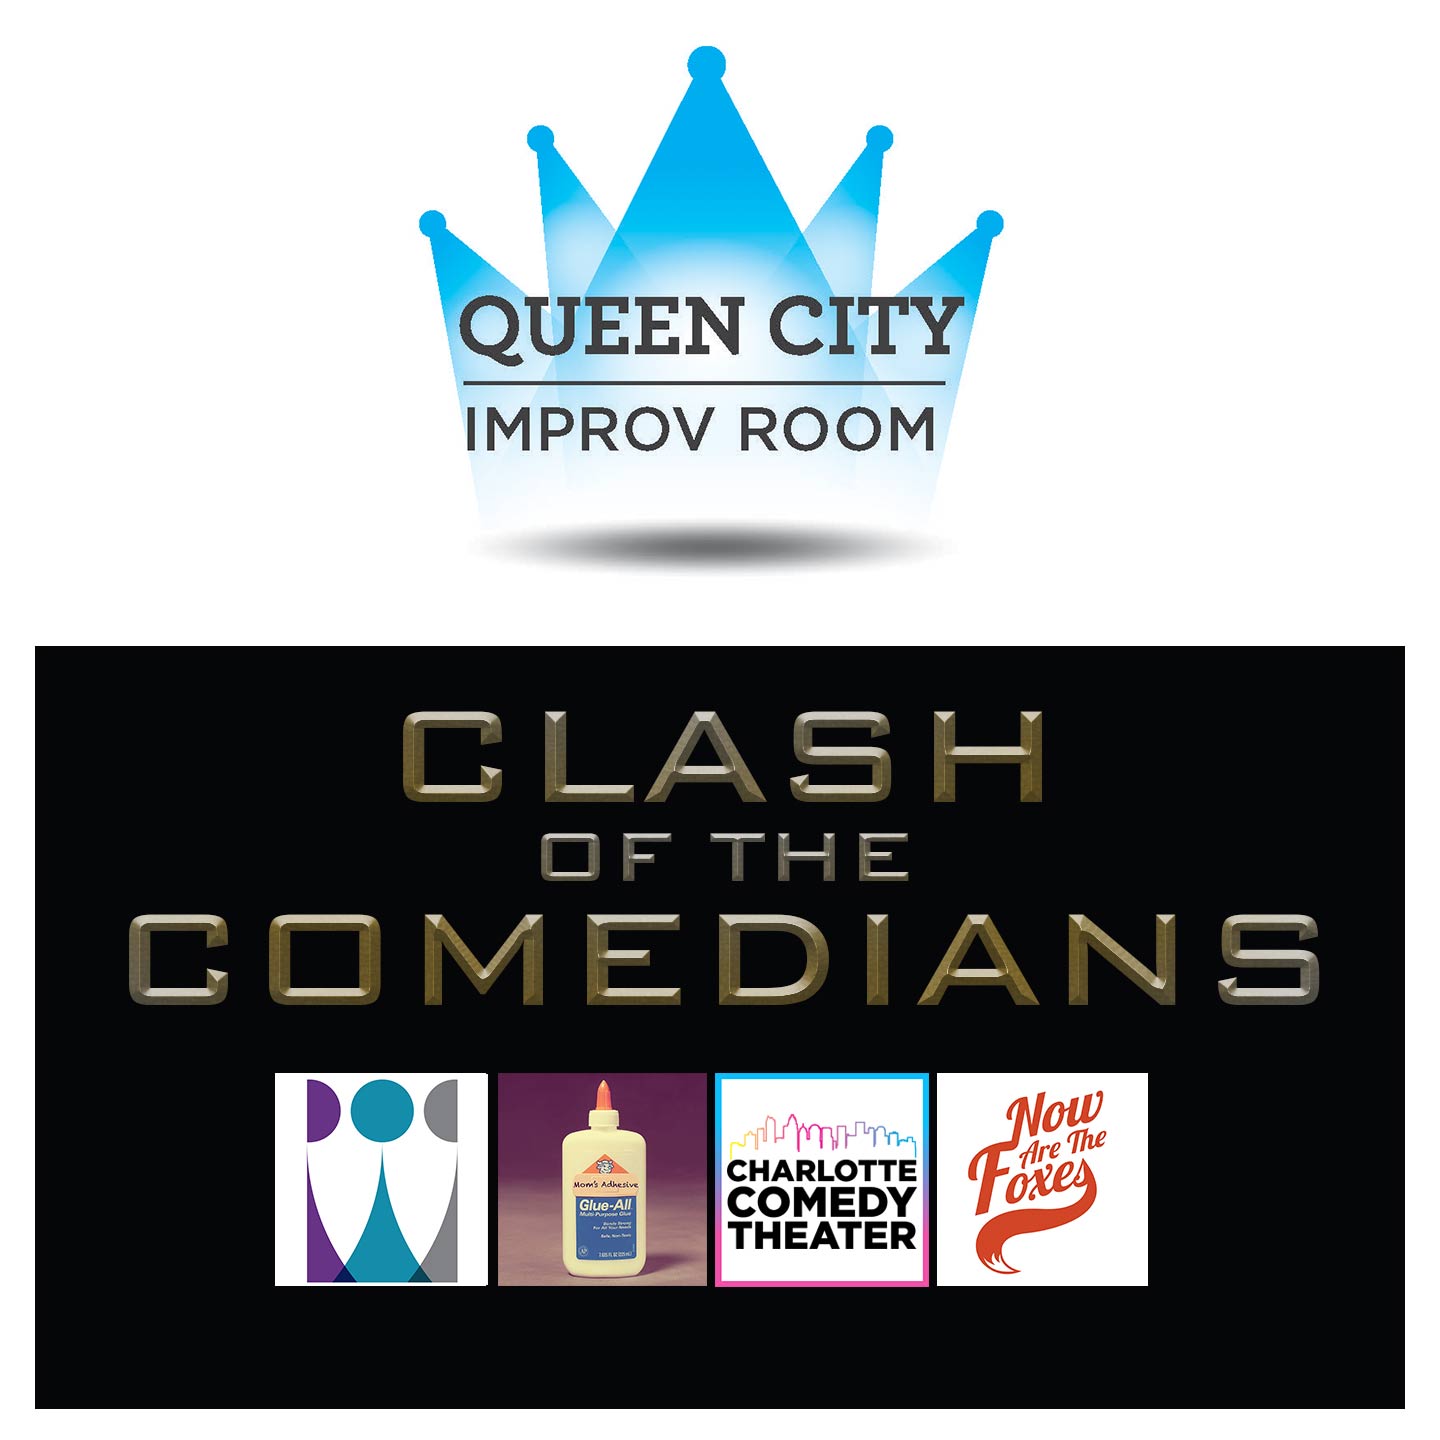 Queen City Improv Room: Clash of the Comedians